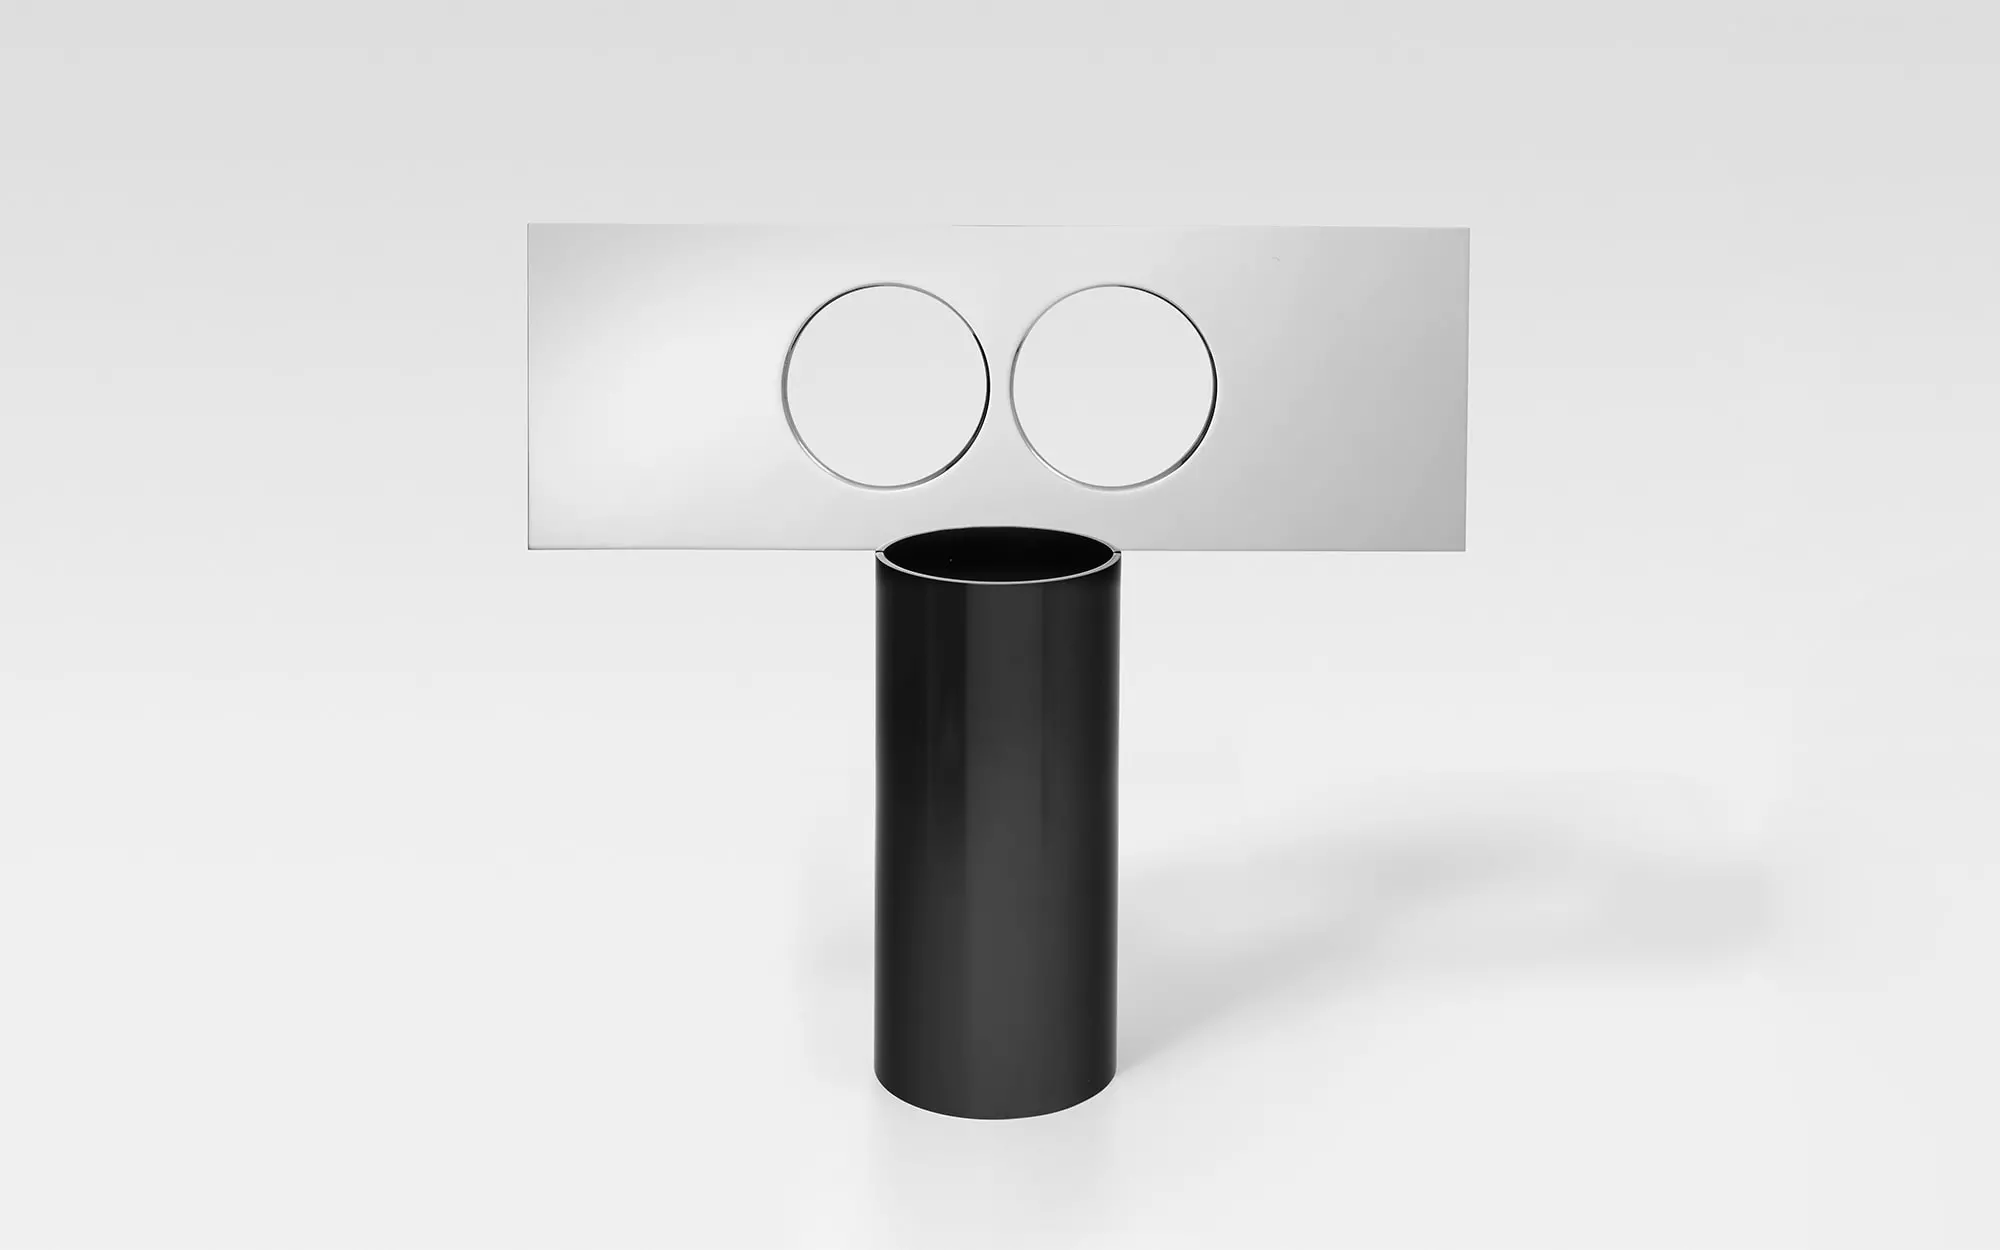 Lunettes - 2 Vase - Pierre Charpin - Console - Galerie kreo